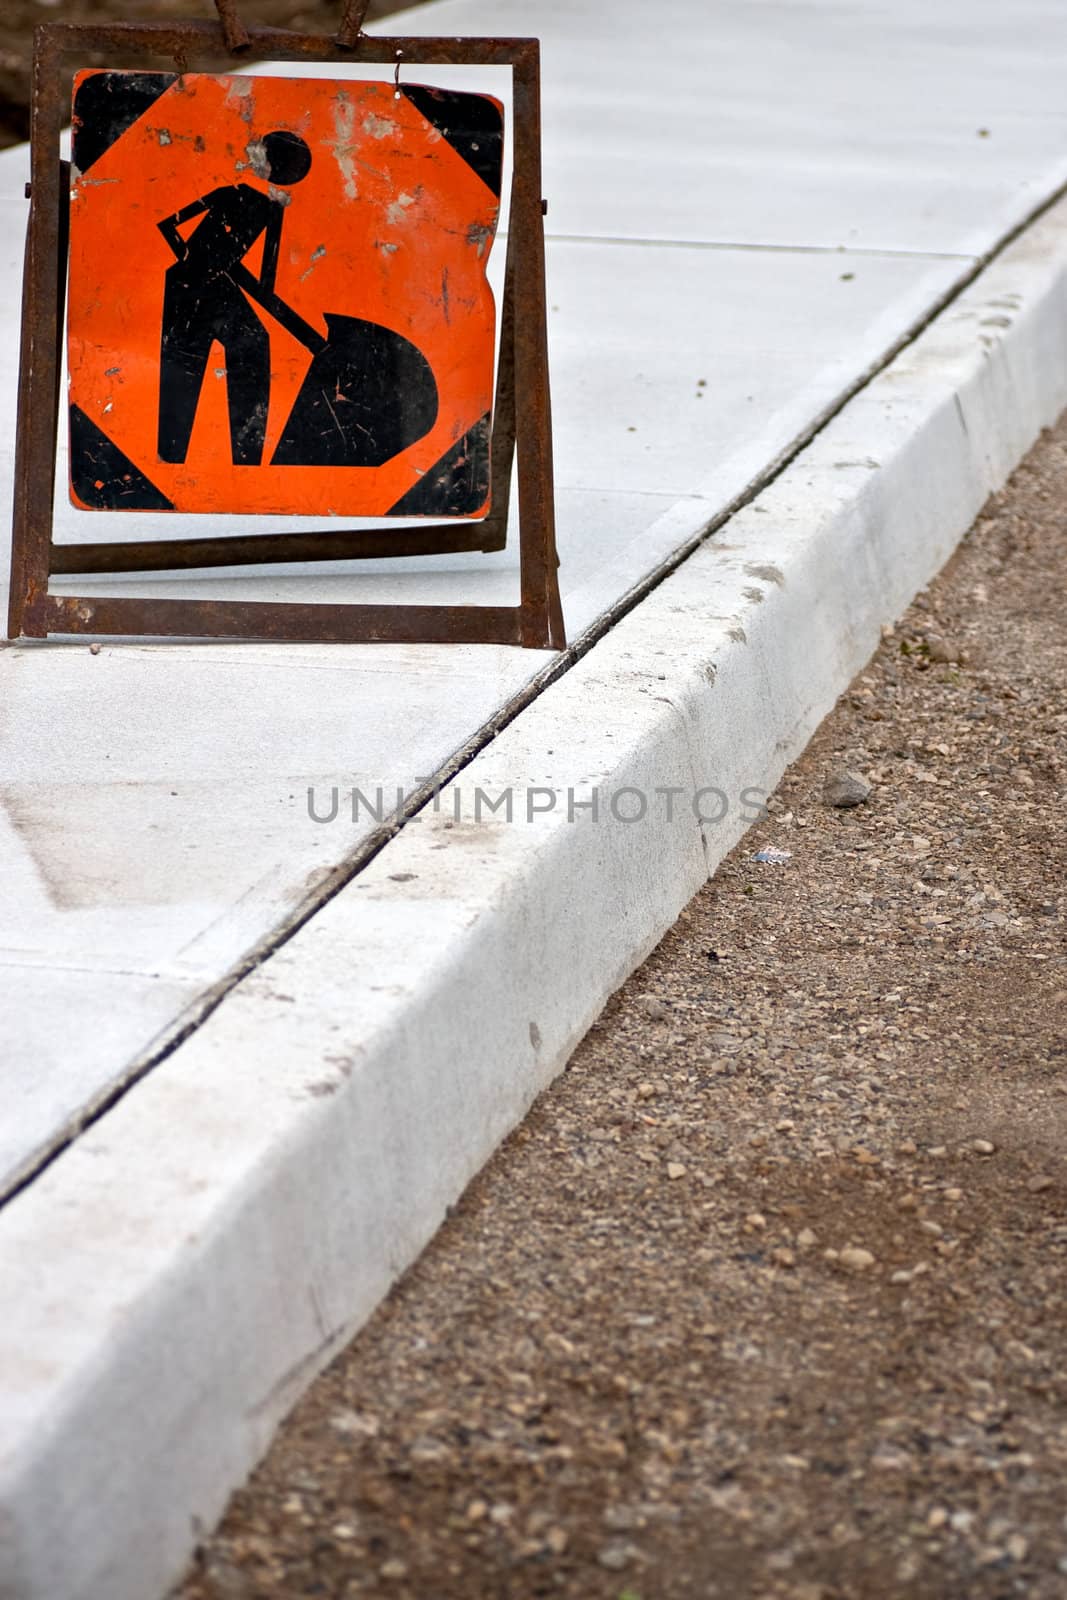 Brand new sidewalk with focus on an orange construction worker sign.